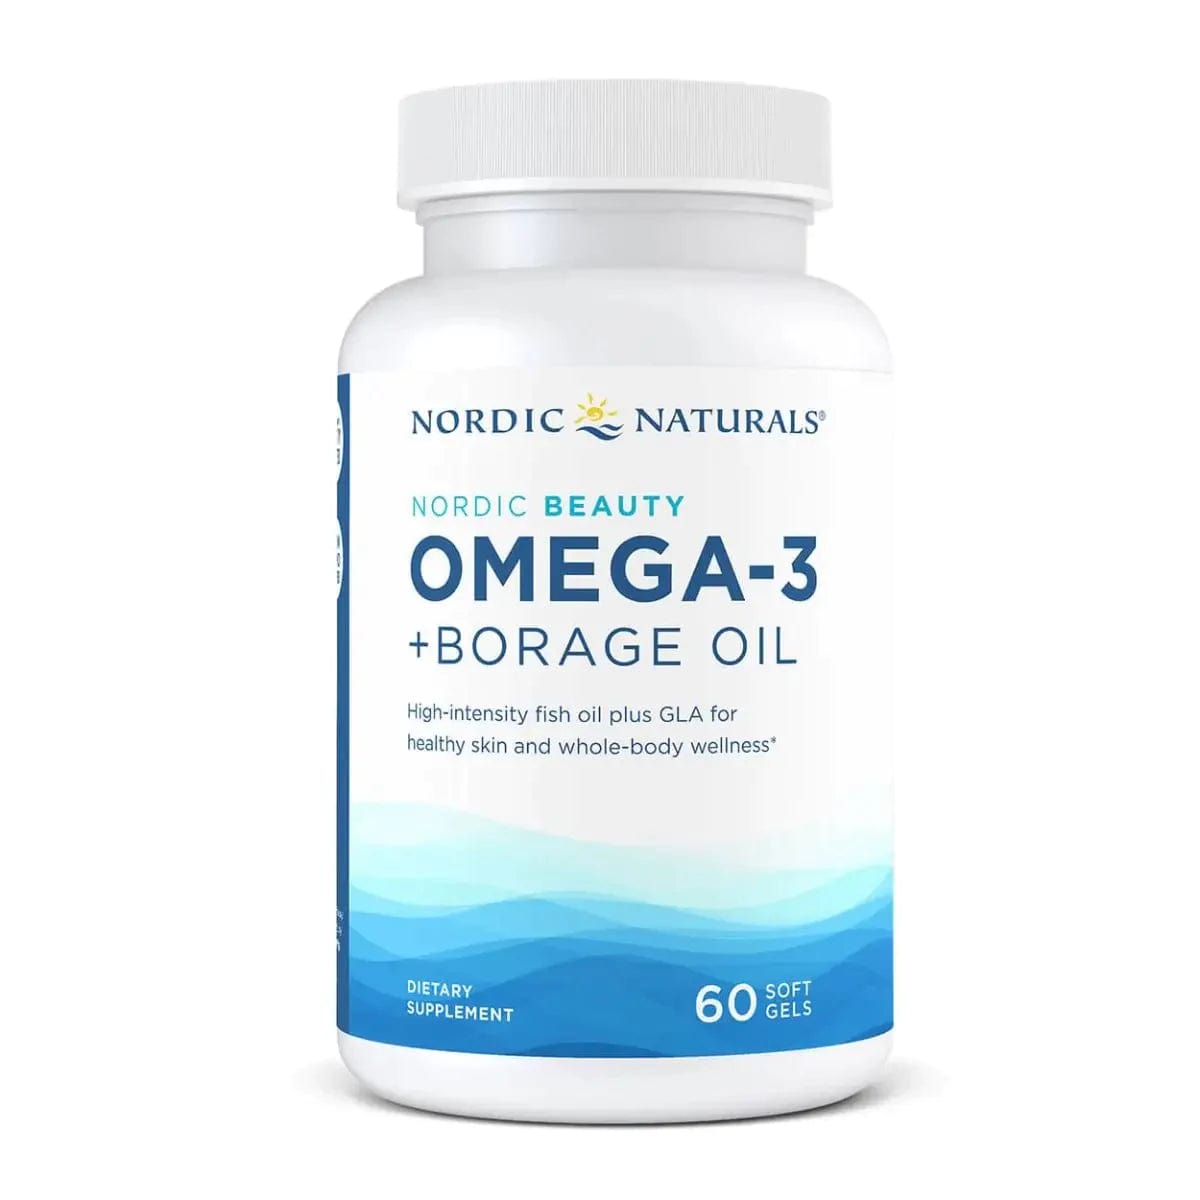 Nordic NaturalsNordic Beauty Omega-3 + Borage OilOmega-3 + Borage OilRED SUPPS